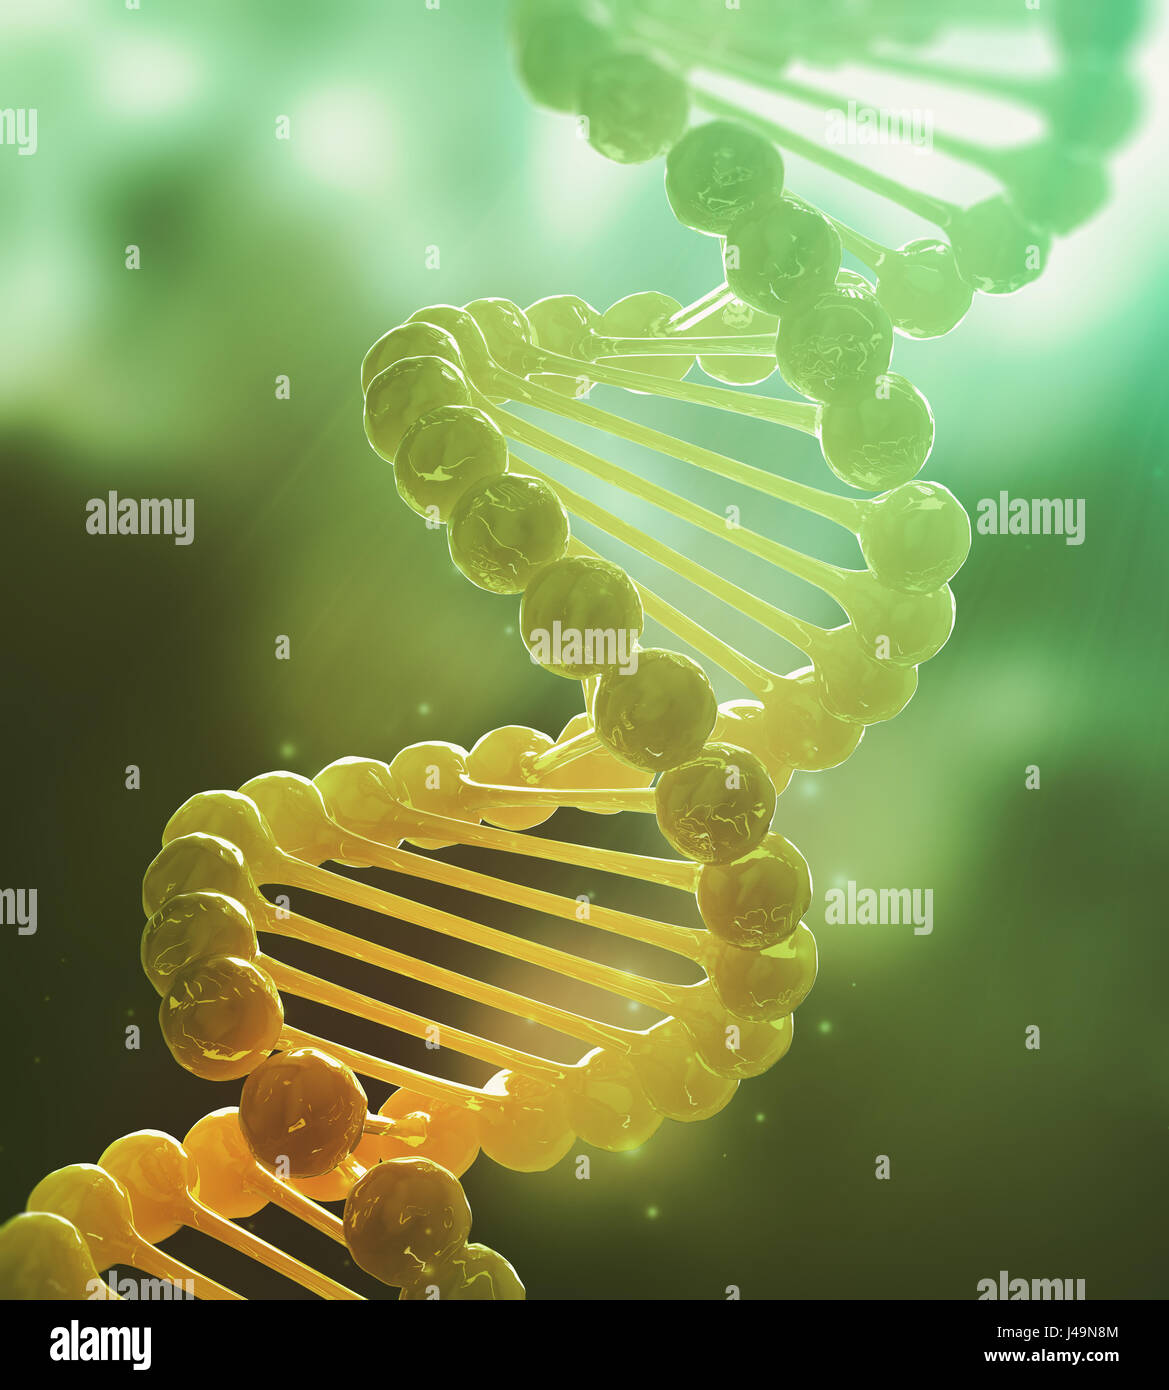 DNA-Strang Modell - Genetik 3D-Illustration Stockfoto